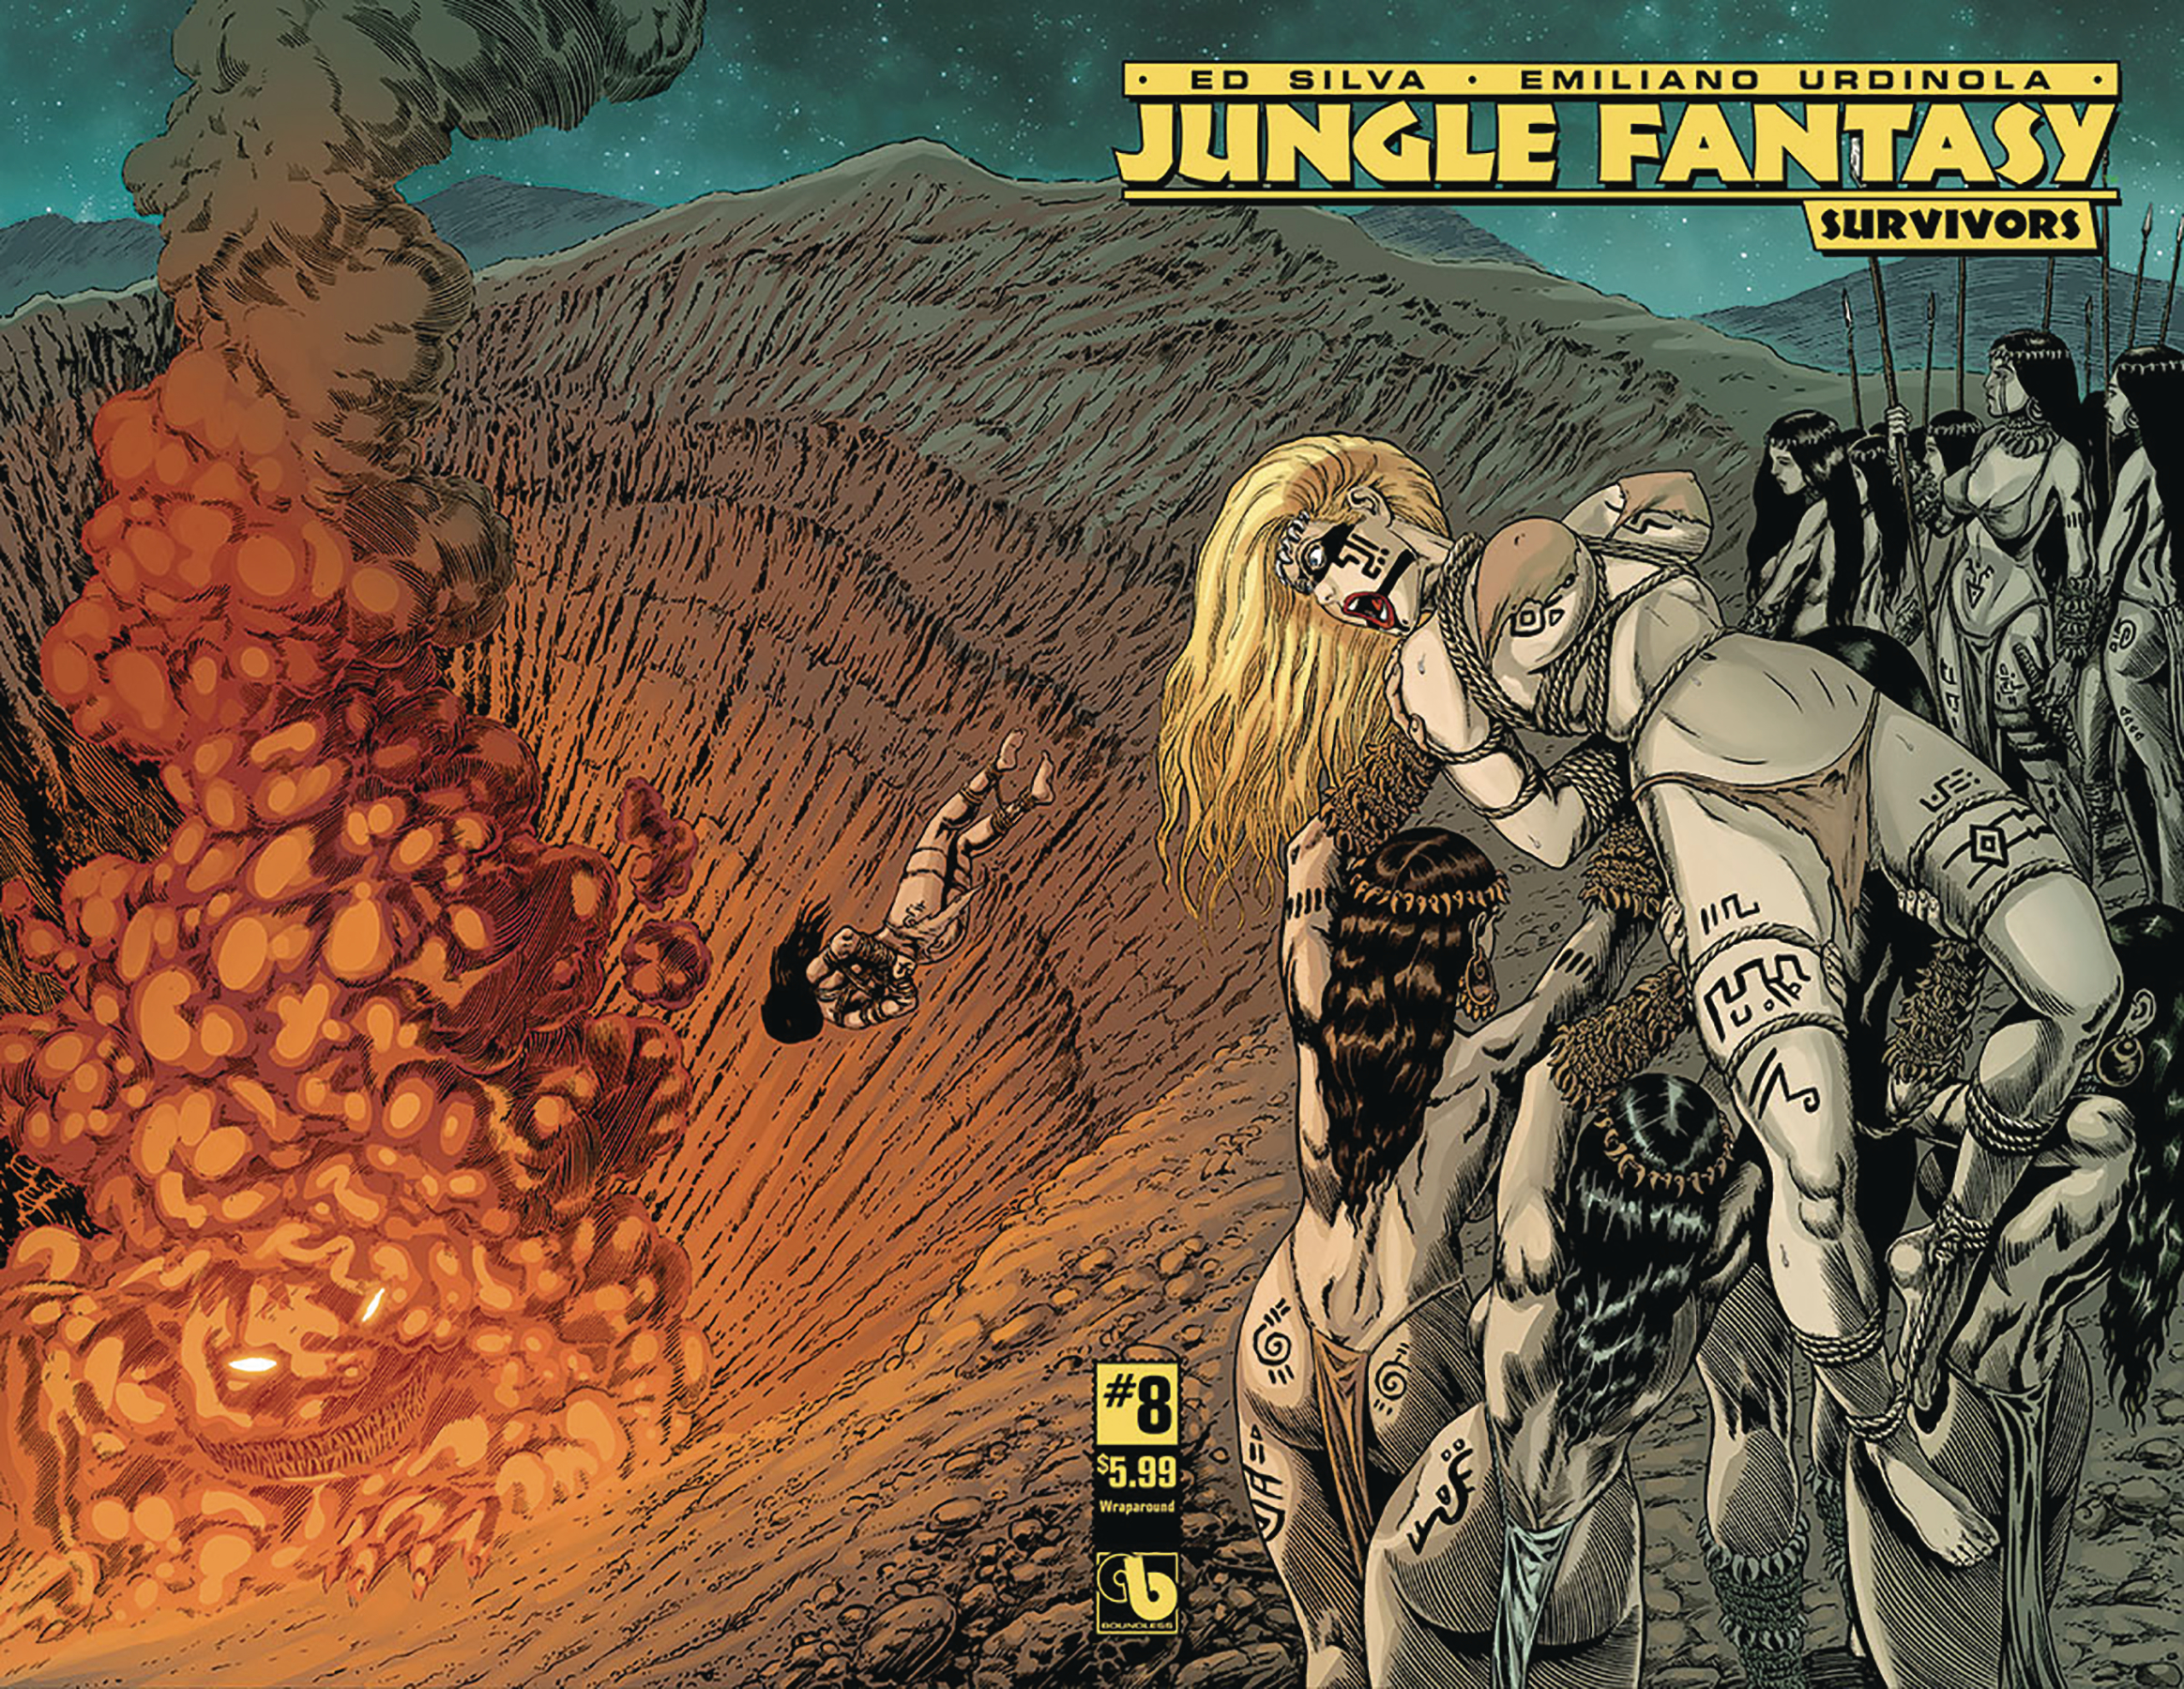 Jungle fantasy survivors #8 wrap (mr) (OCT171355) .